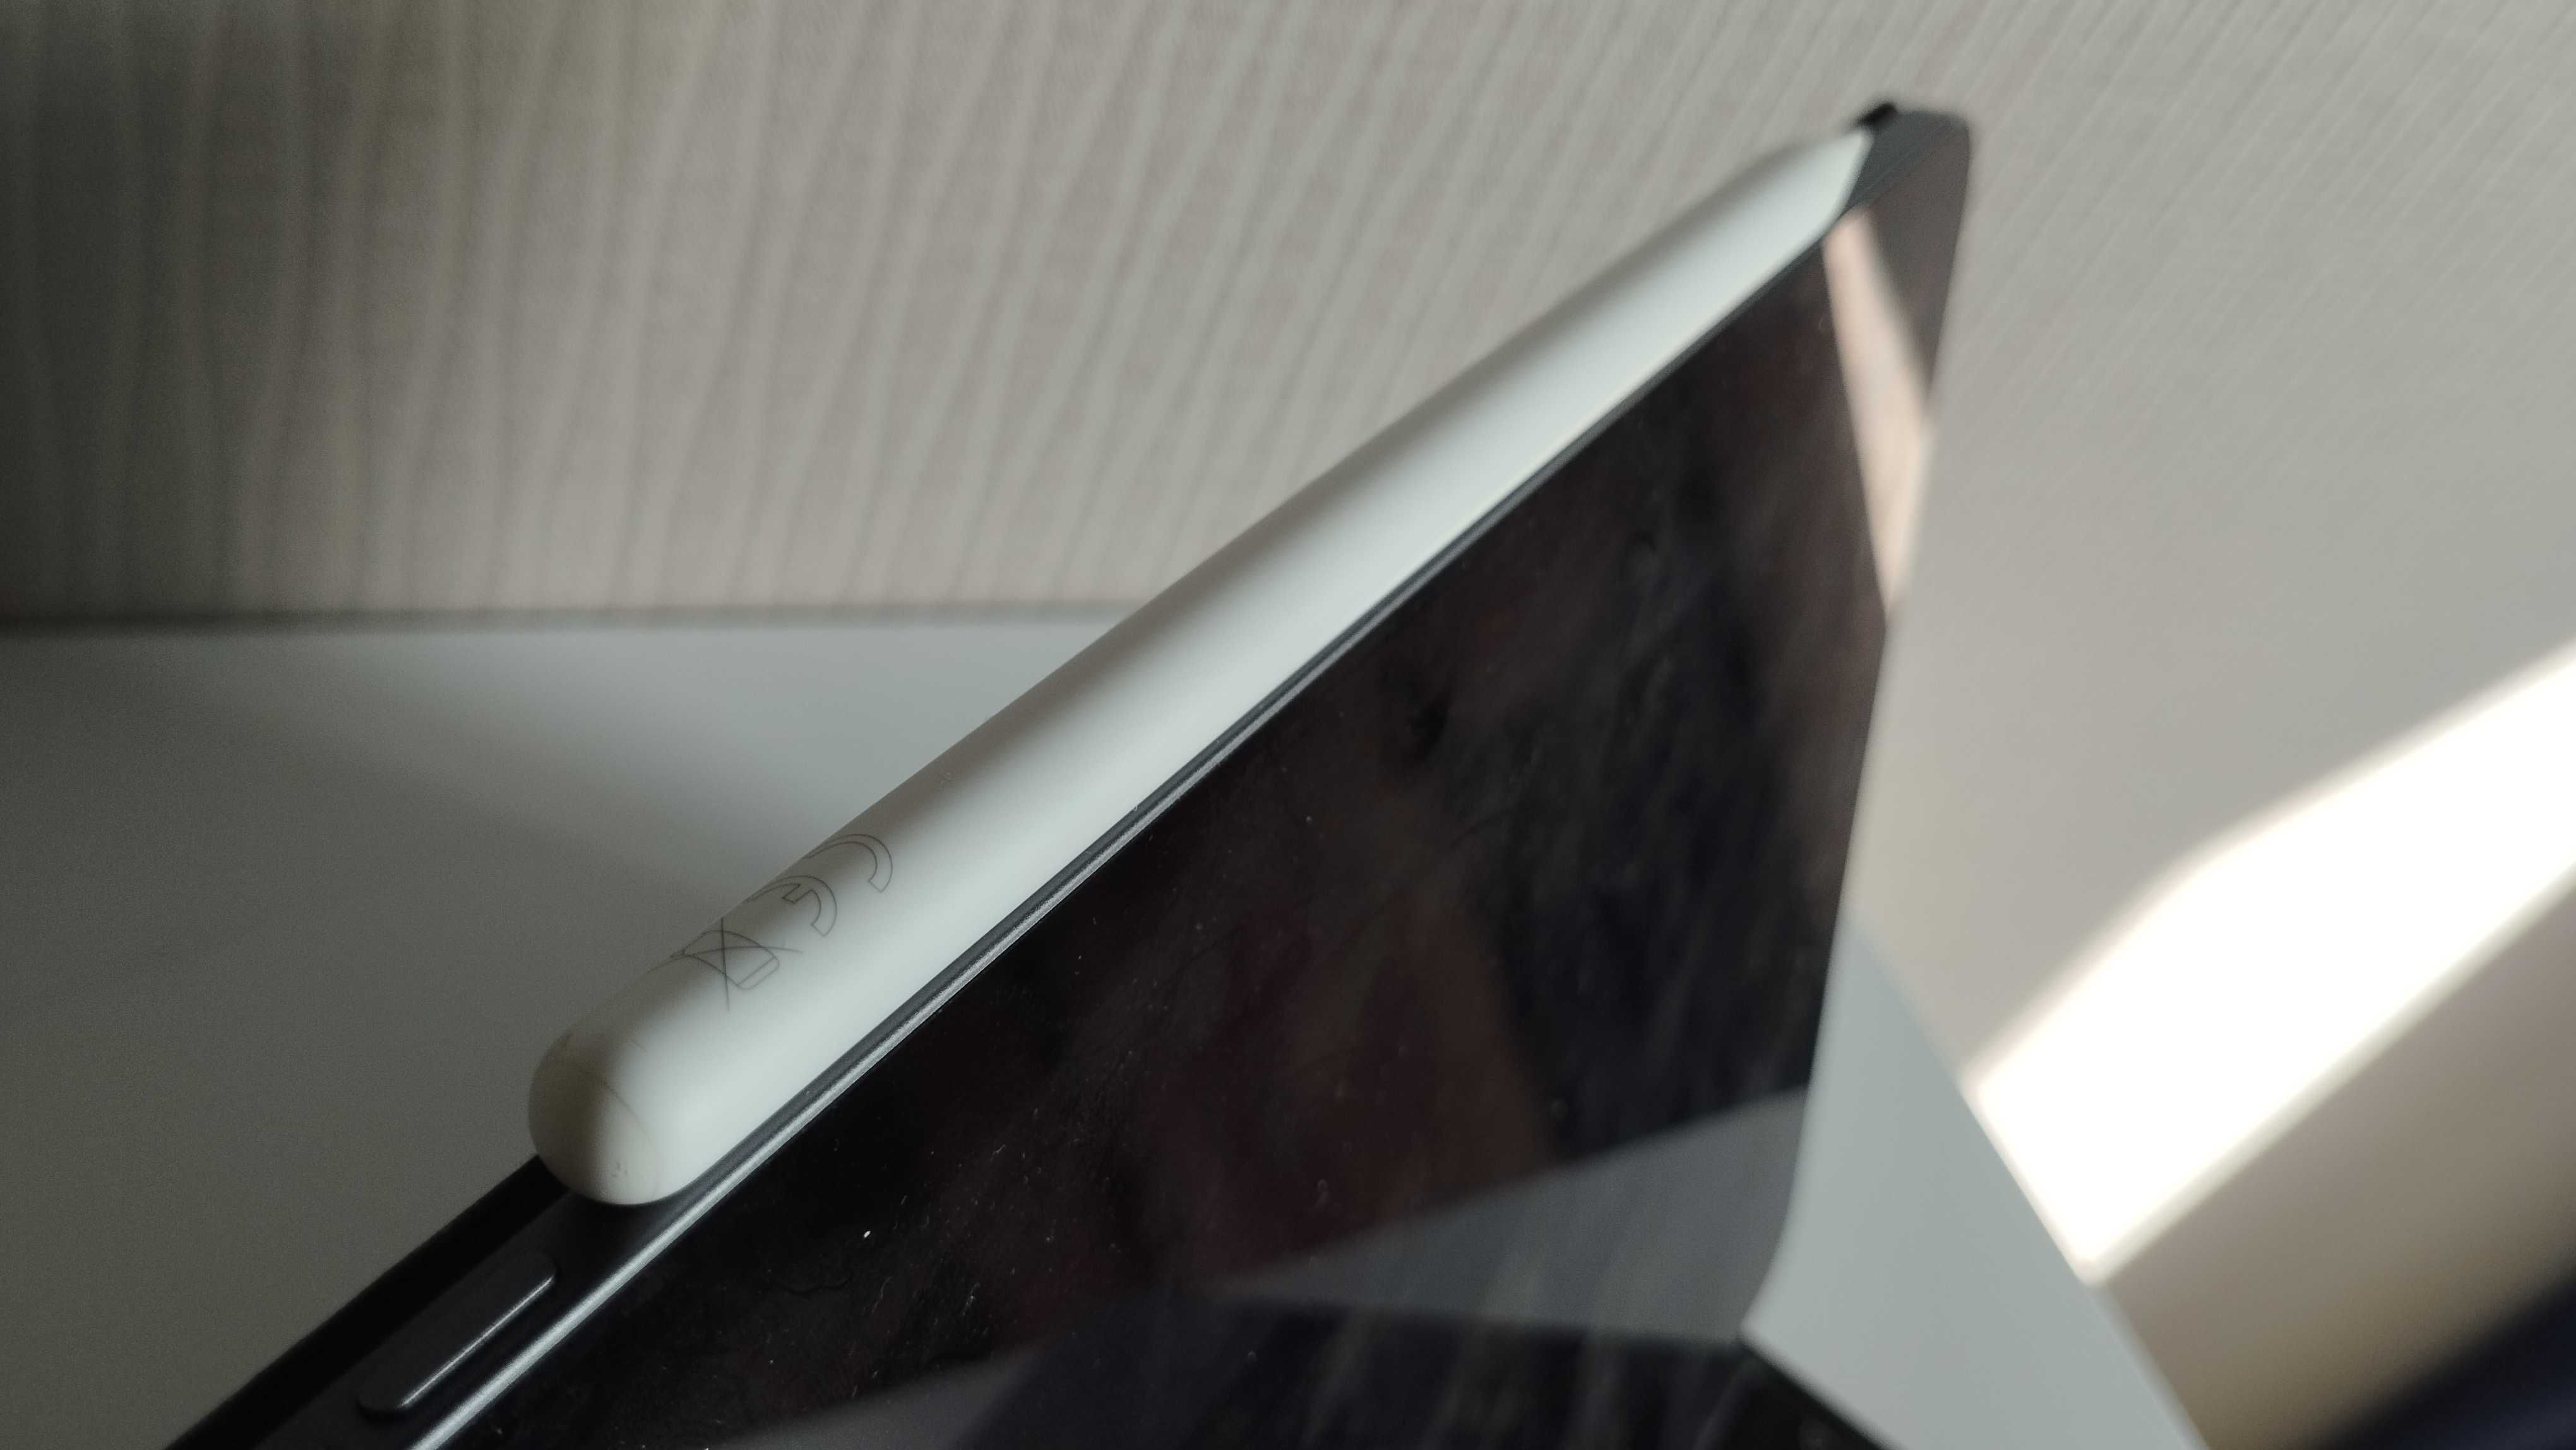 iPad Pro (11-inch) (2nd generation) 128 GB + Apple Pencil + Keyboard